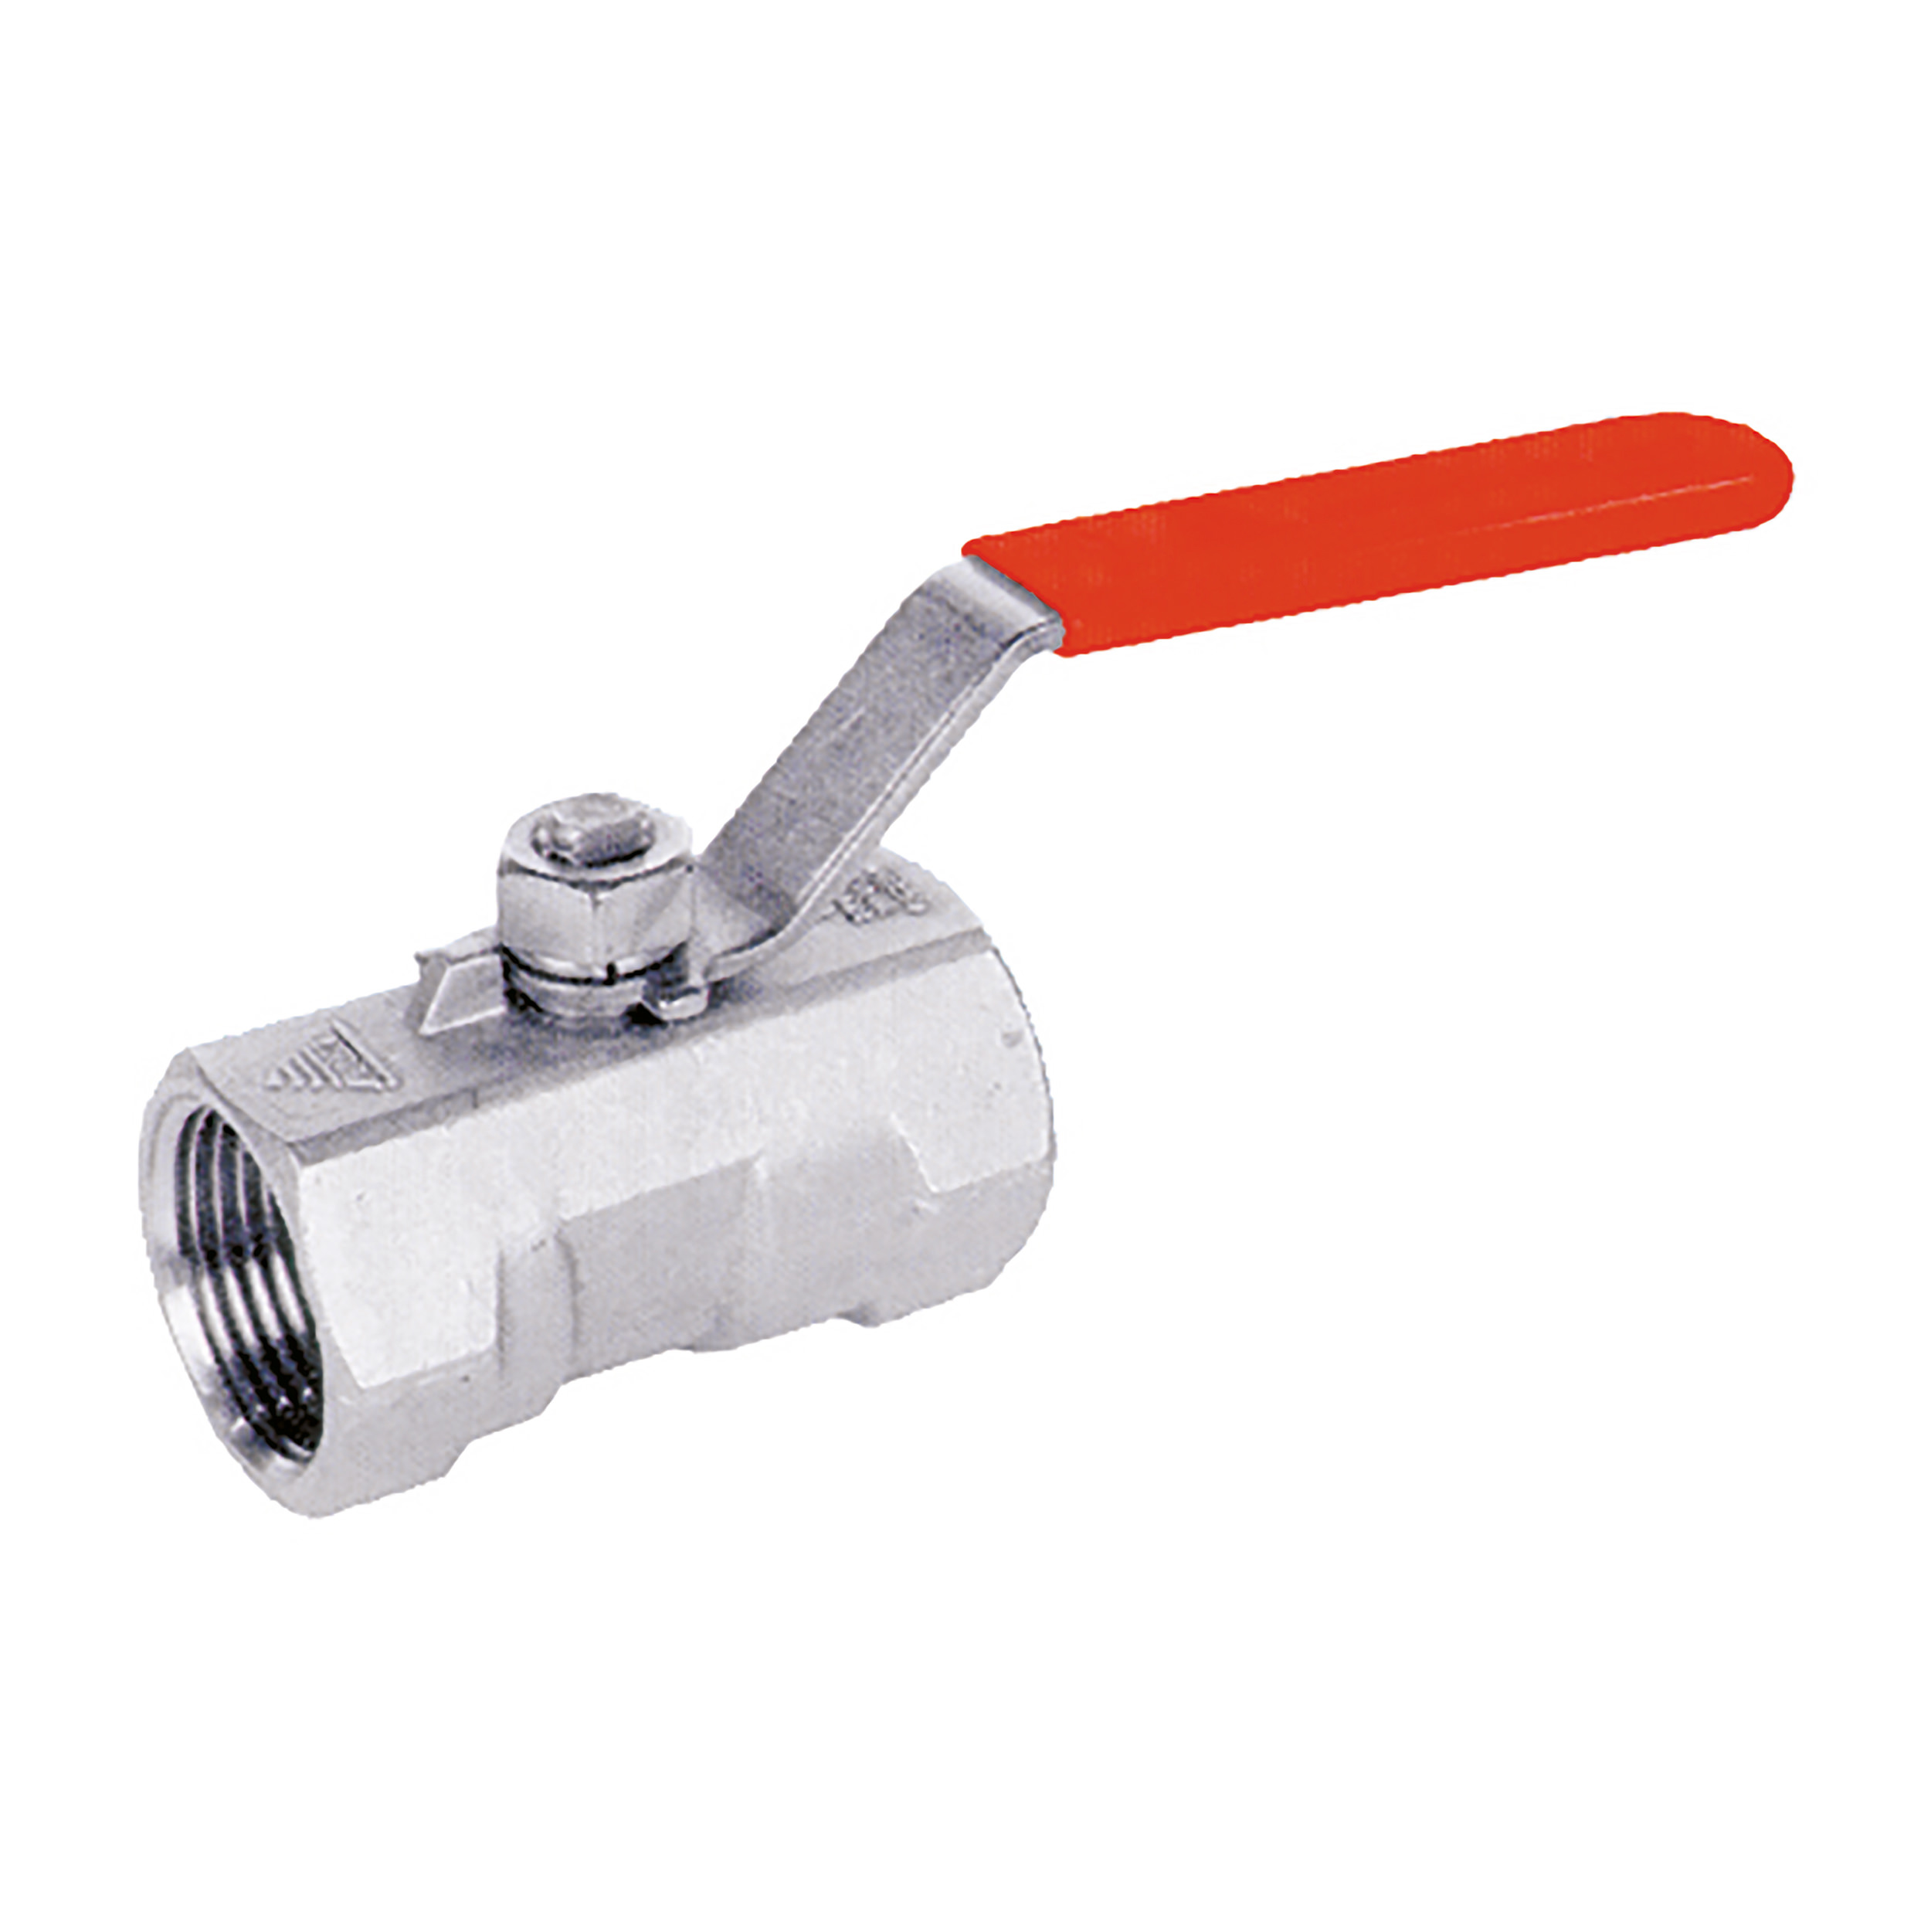 One-piece ball valve, thread: G¼, weight: 70 g, MOP 55 bar (at: medium temperature approx. room temperature), reduced passage